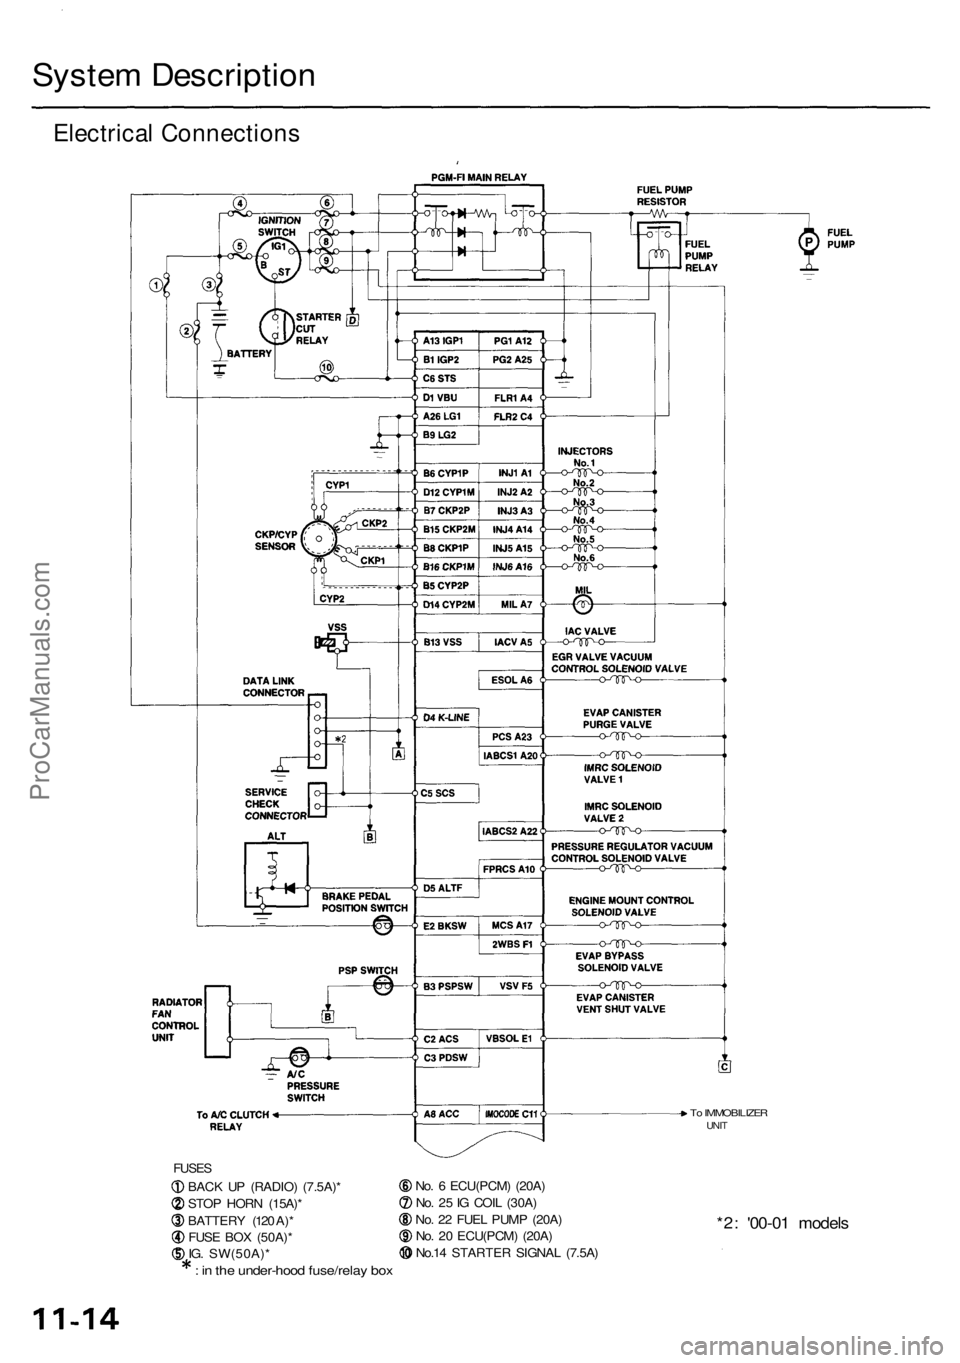 ACURA RL KA9 1996  Service Repair Manual System Descriptio n
Electrical Connection s
FUSES
BACK U P (RADIO ) (7.5A) *
STO P HOR N (15A) *
BATTER Y (12 0 A) *
FUS E BO X (50A) *
IG . SW(50A) *
: i n  th e under-hoo d fuse/rela y bo x
No. 6  E